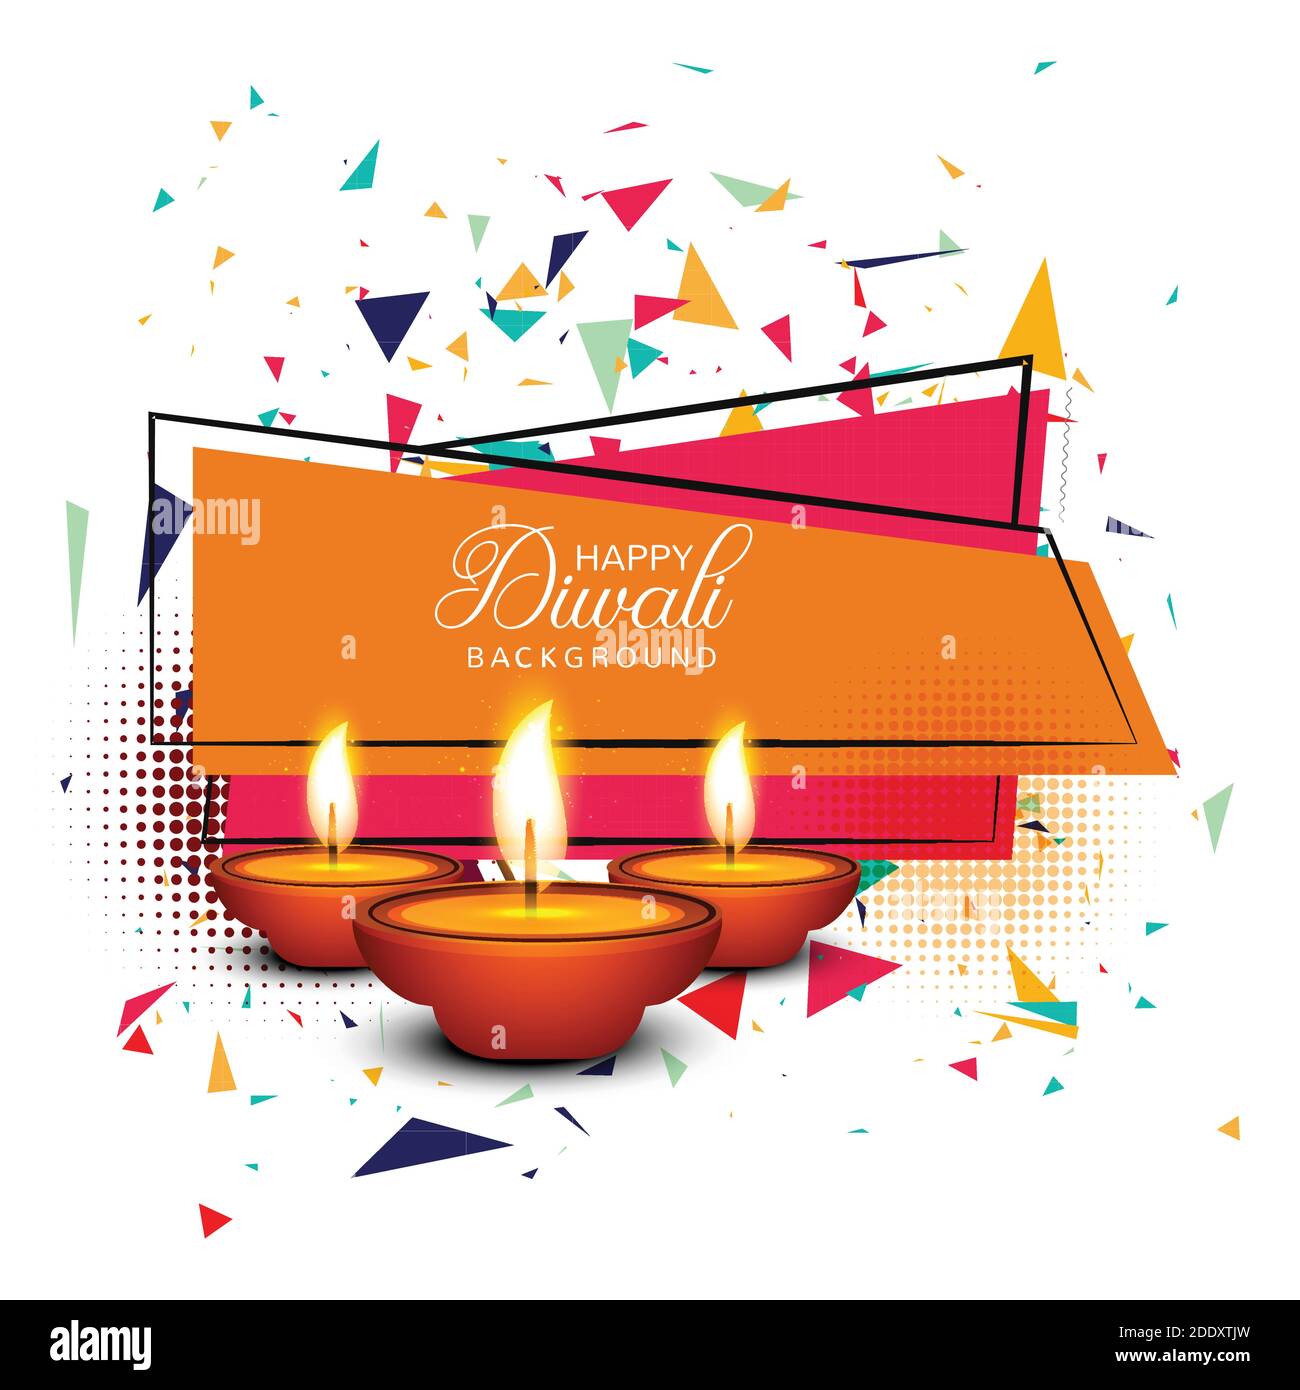 Happy diwali diya oil lamp festival card background illustration Stock Vector